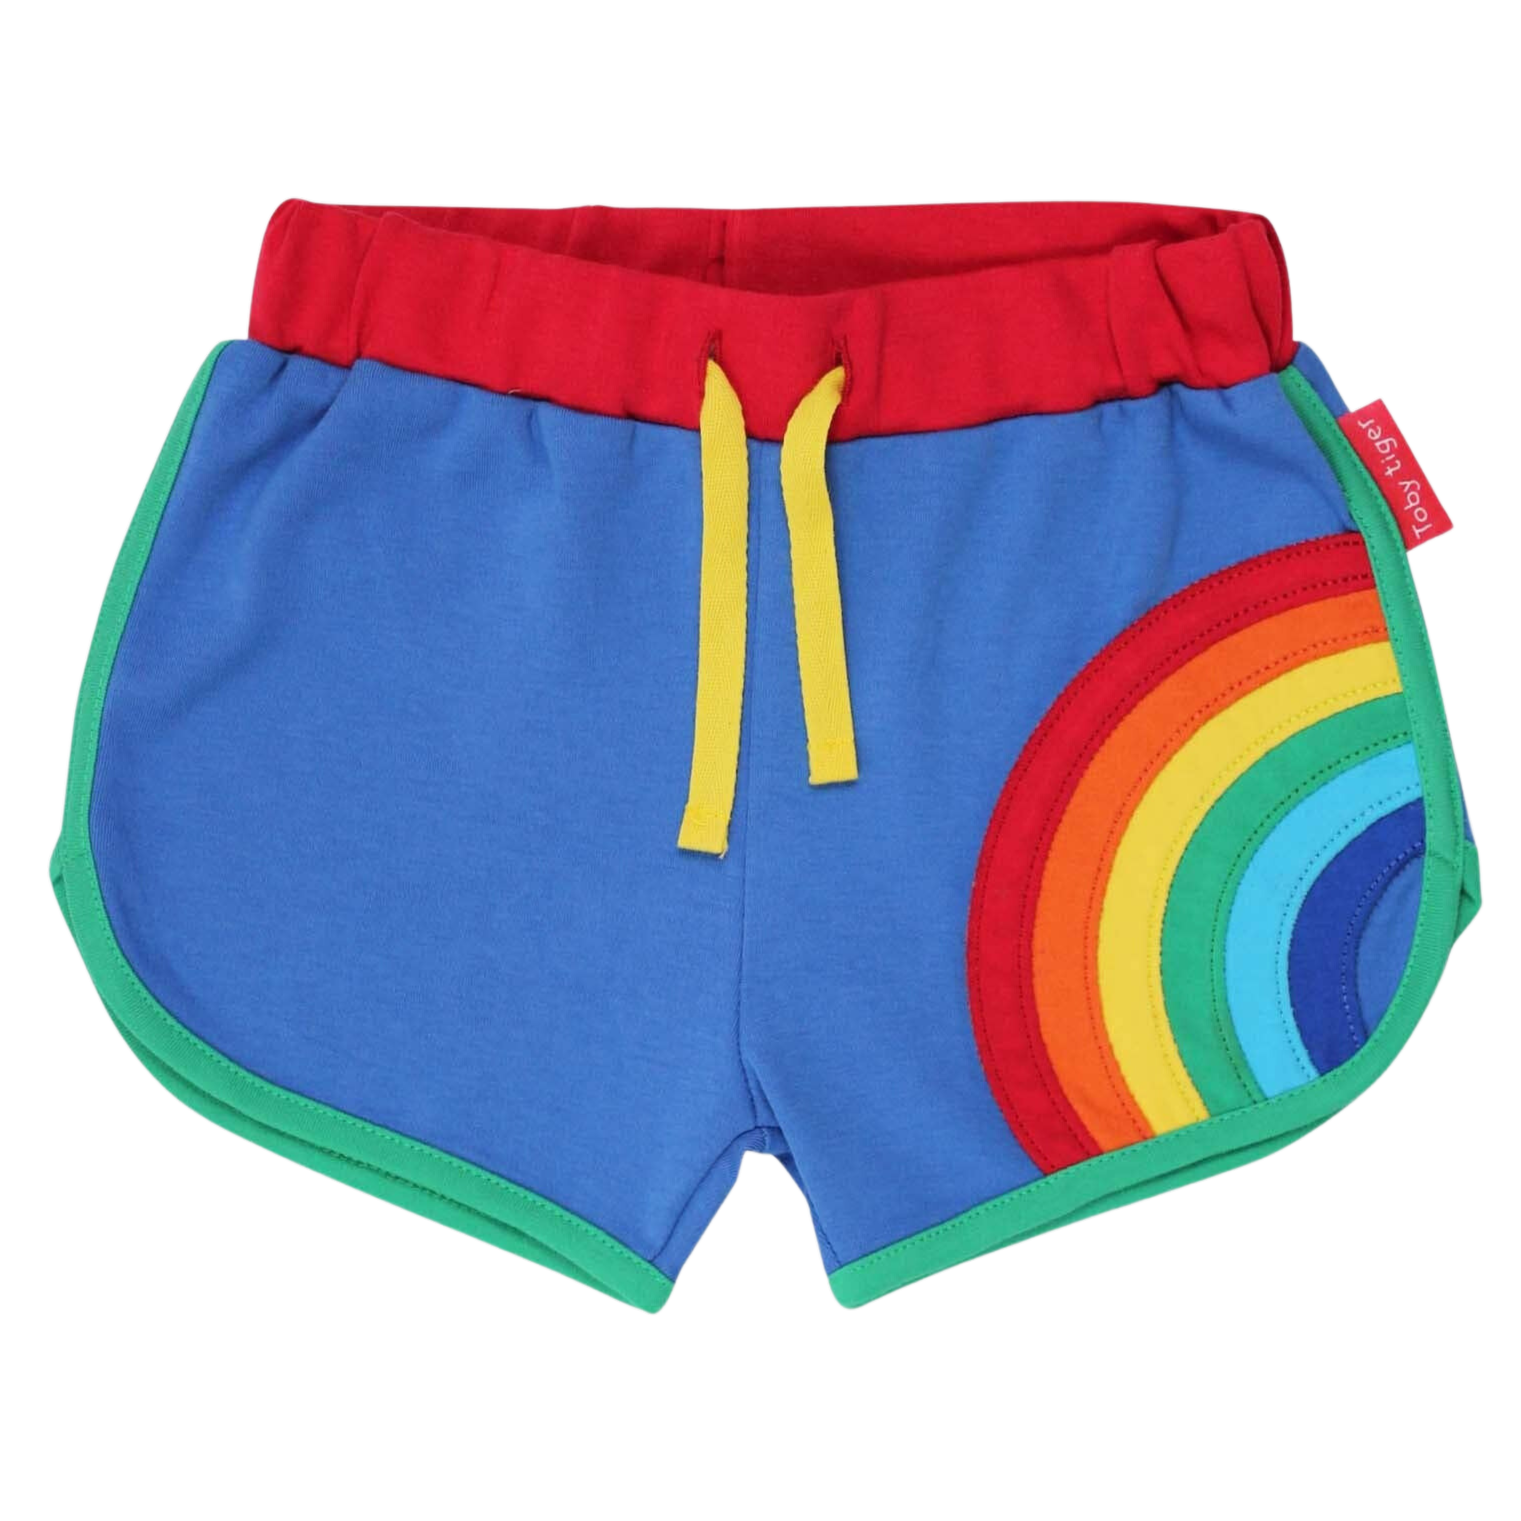 Organic Rainbow Applique Running Shorts